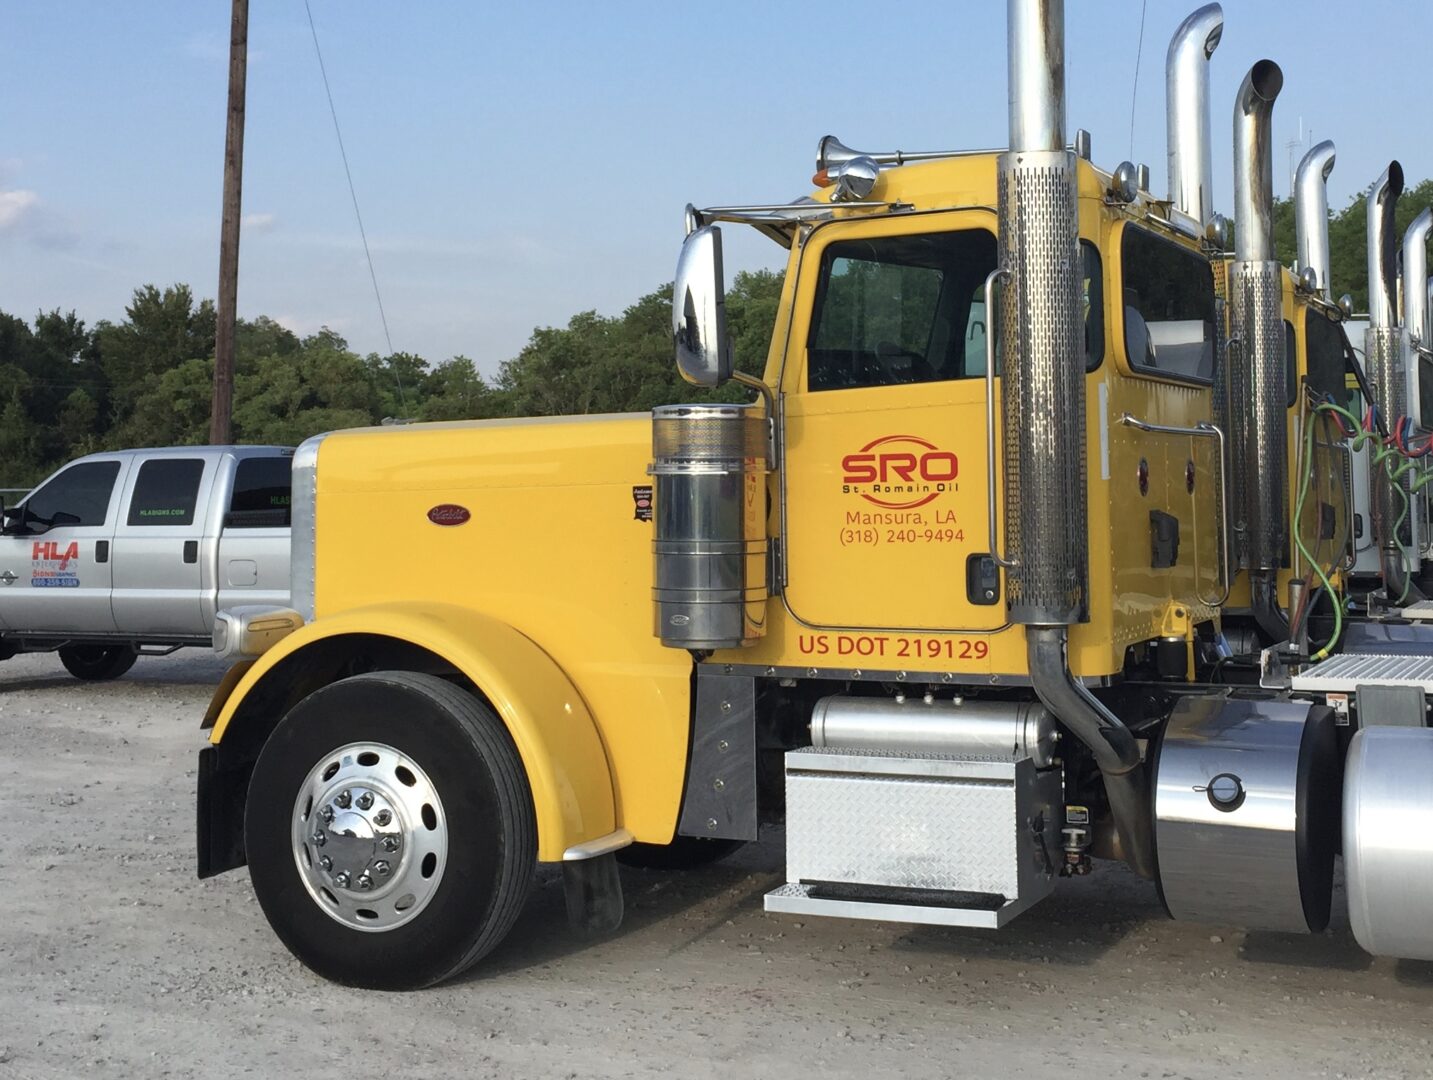 St. Romain Oil Fuel Transport Truck Lettering & Graphics, Mansura Louisiana HLA Signs